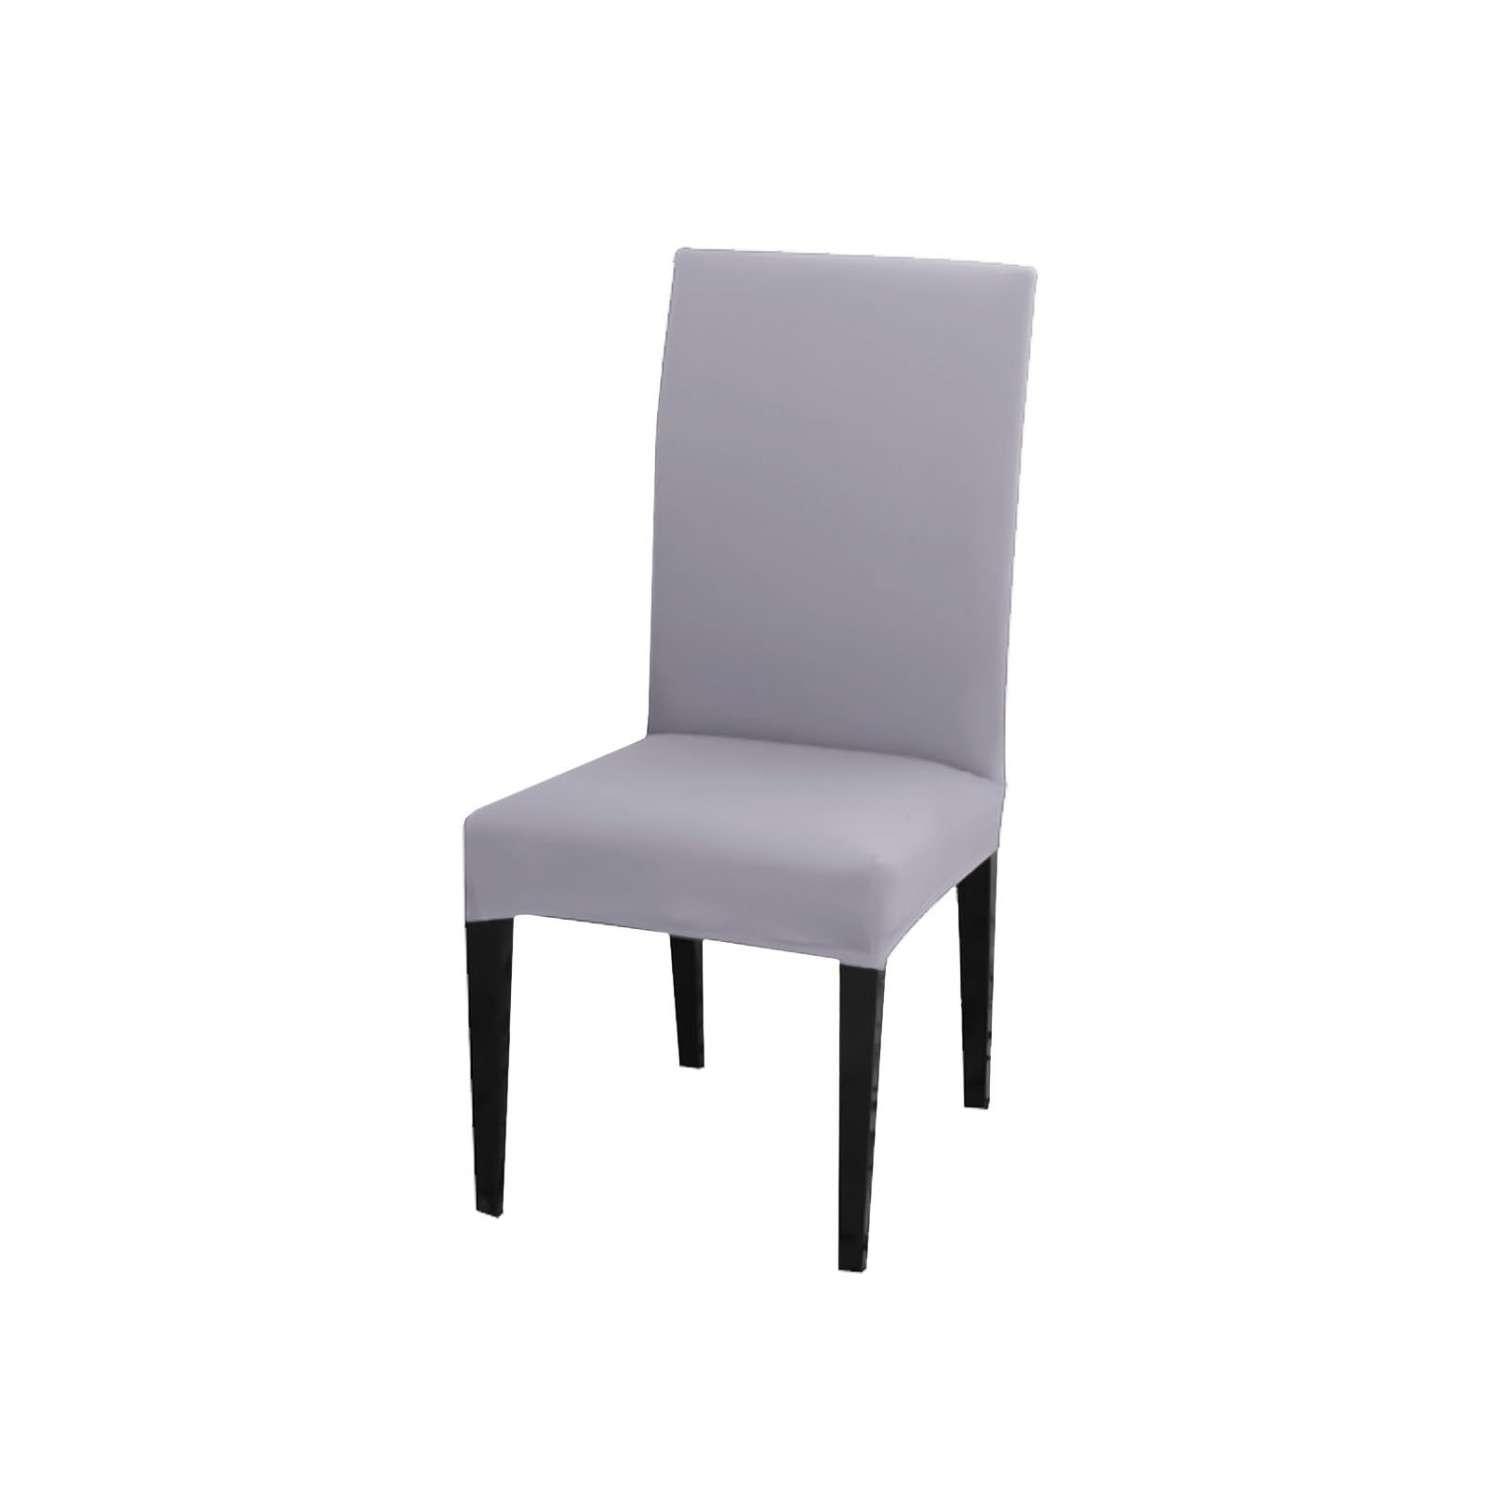 Чехол на стул LuxAlto Коллекция Jersey светло-серый - фото 1